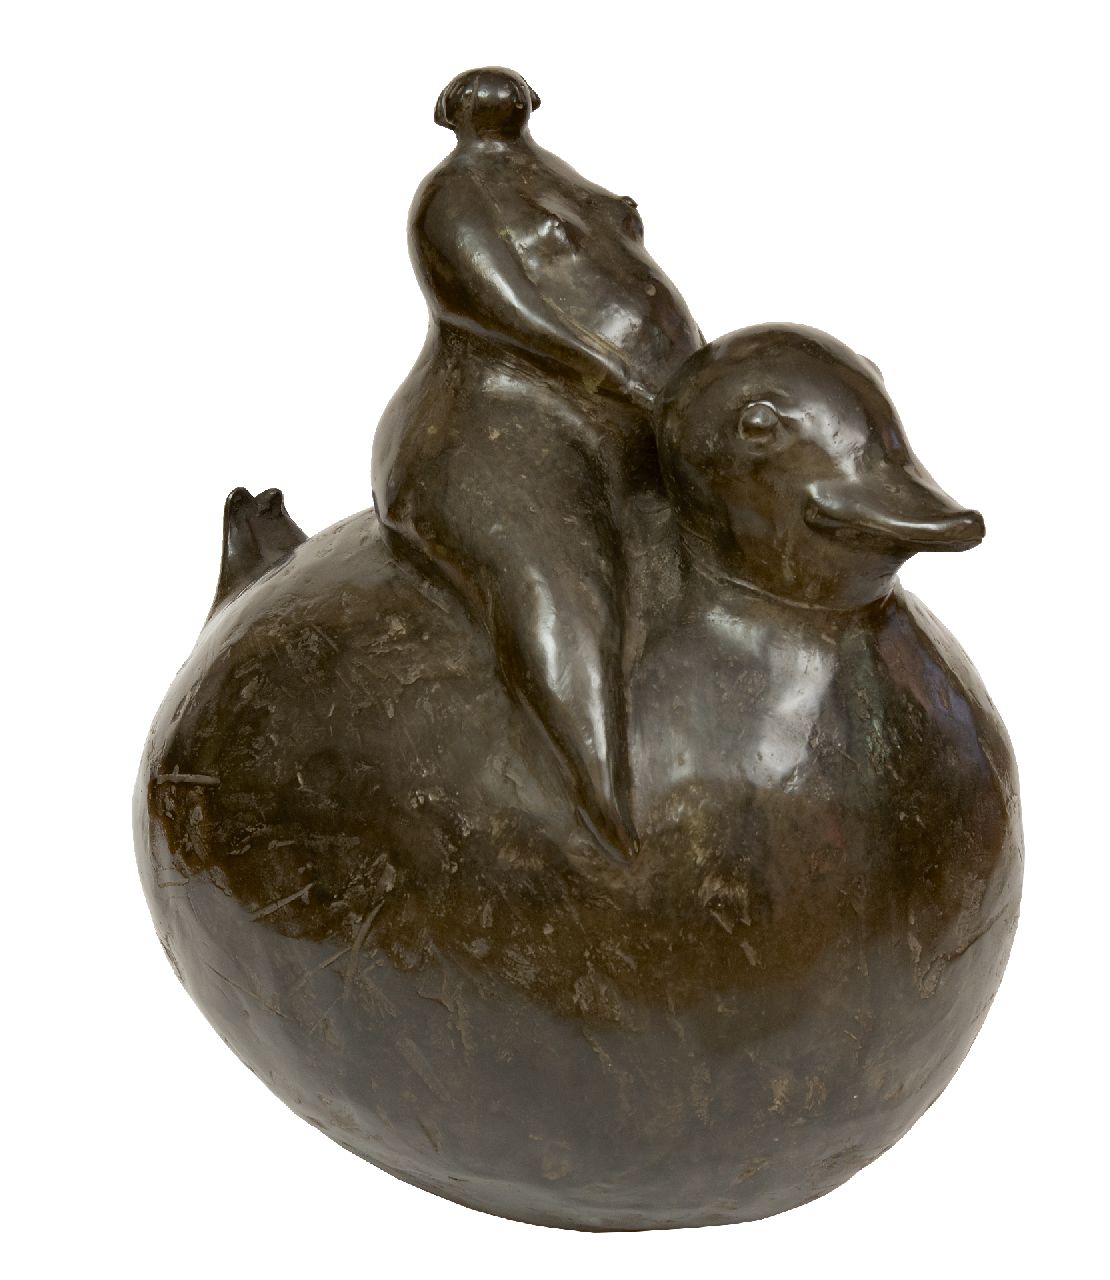 Hemert E. van | Evert van Hemert, Rubber Duck, patinated bronze 52.0 x 46.0 cm, signed under the tail with monogram and executed in 2009